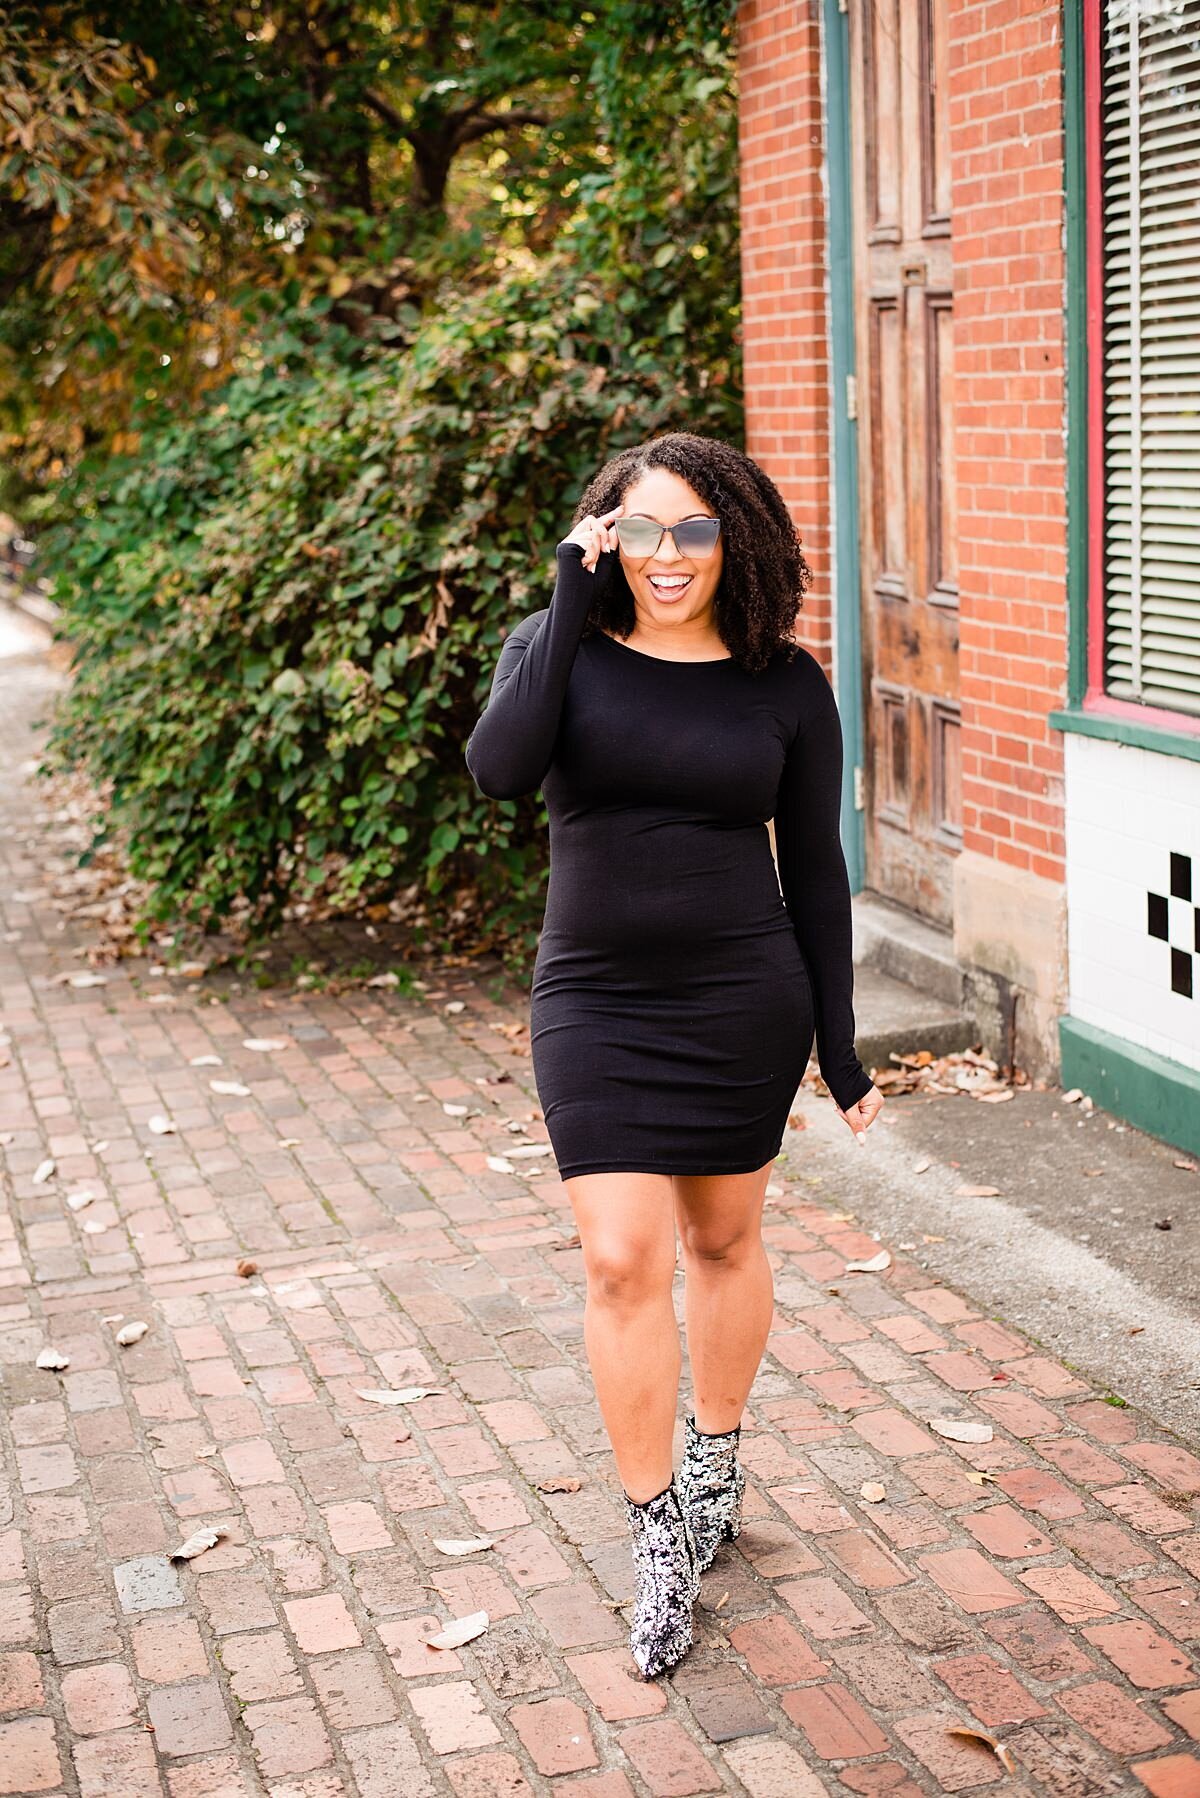 Social influencer modeling clothes in Germantown near Nashville on brick cobblestone sidewalk